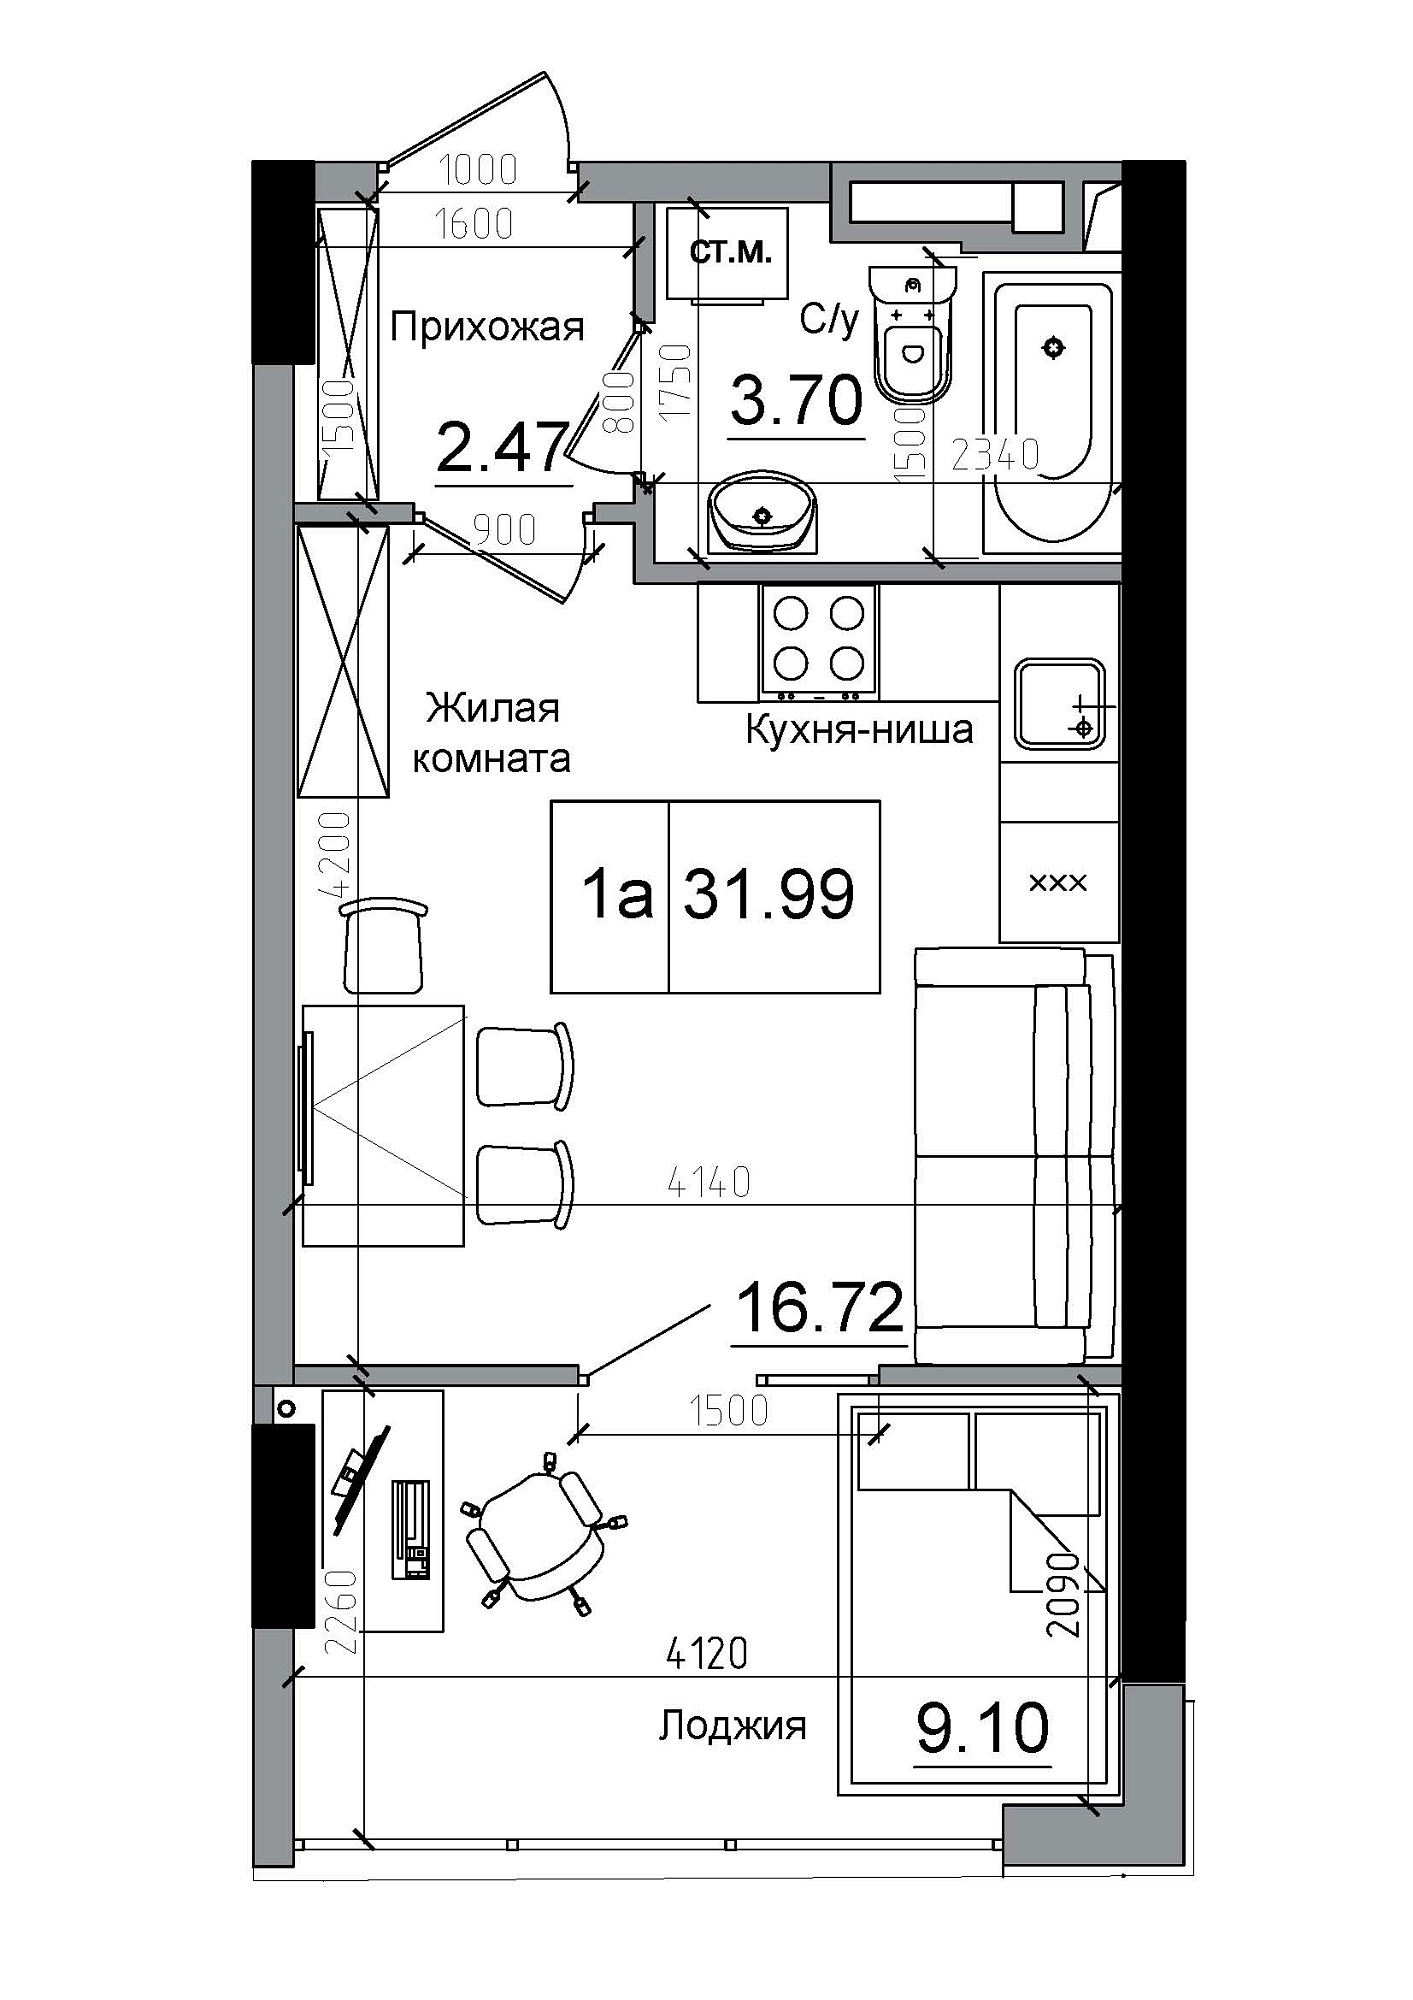 Planning Smart flats area 31.99m2, AB-12-02/00001.